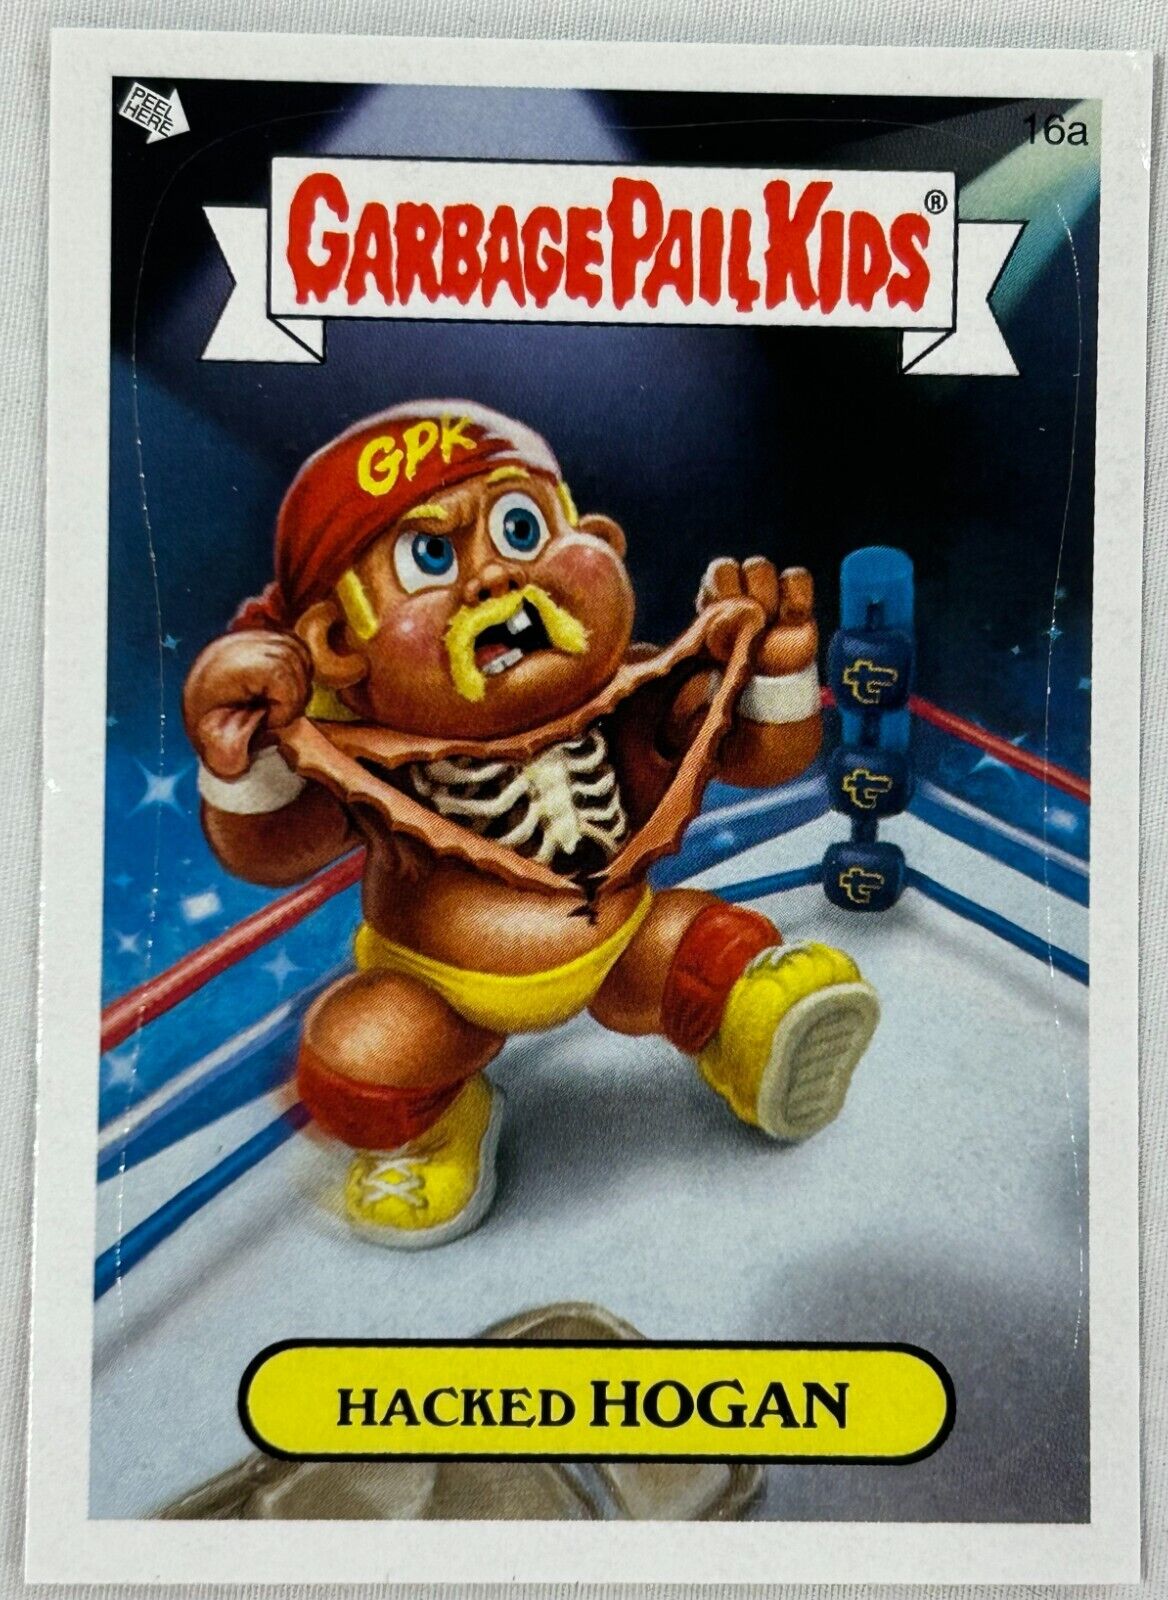 2007 Garbage Pail Kids All New Series 6 HACKED HOGAN 16a Card GPK Hulk Hogan